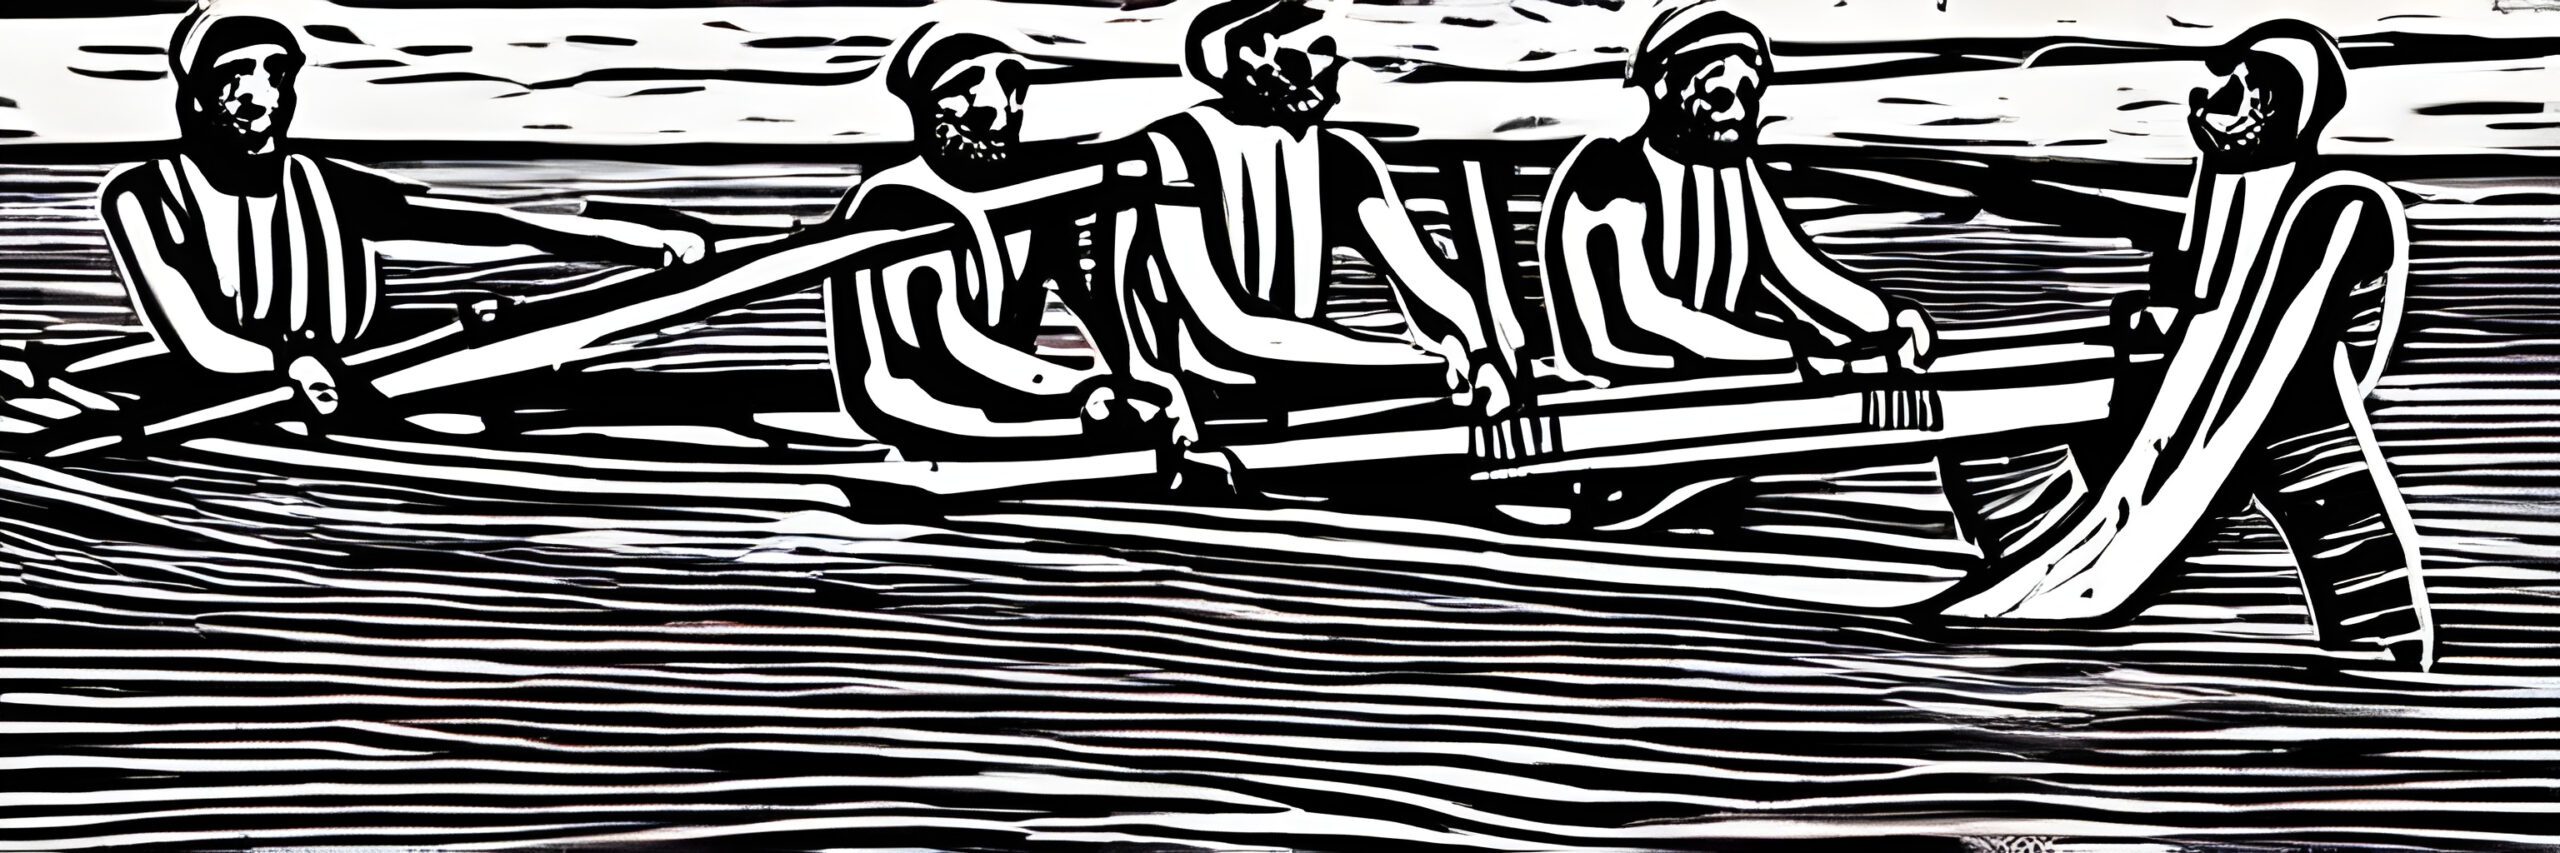 Galley slaves rowing